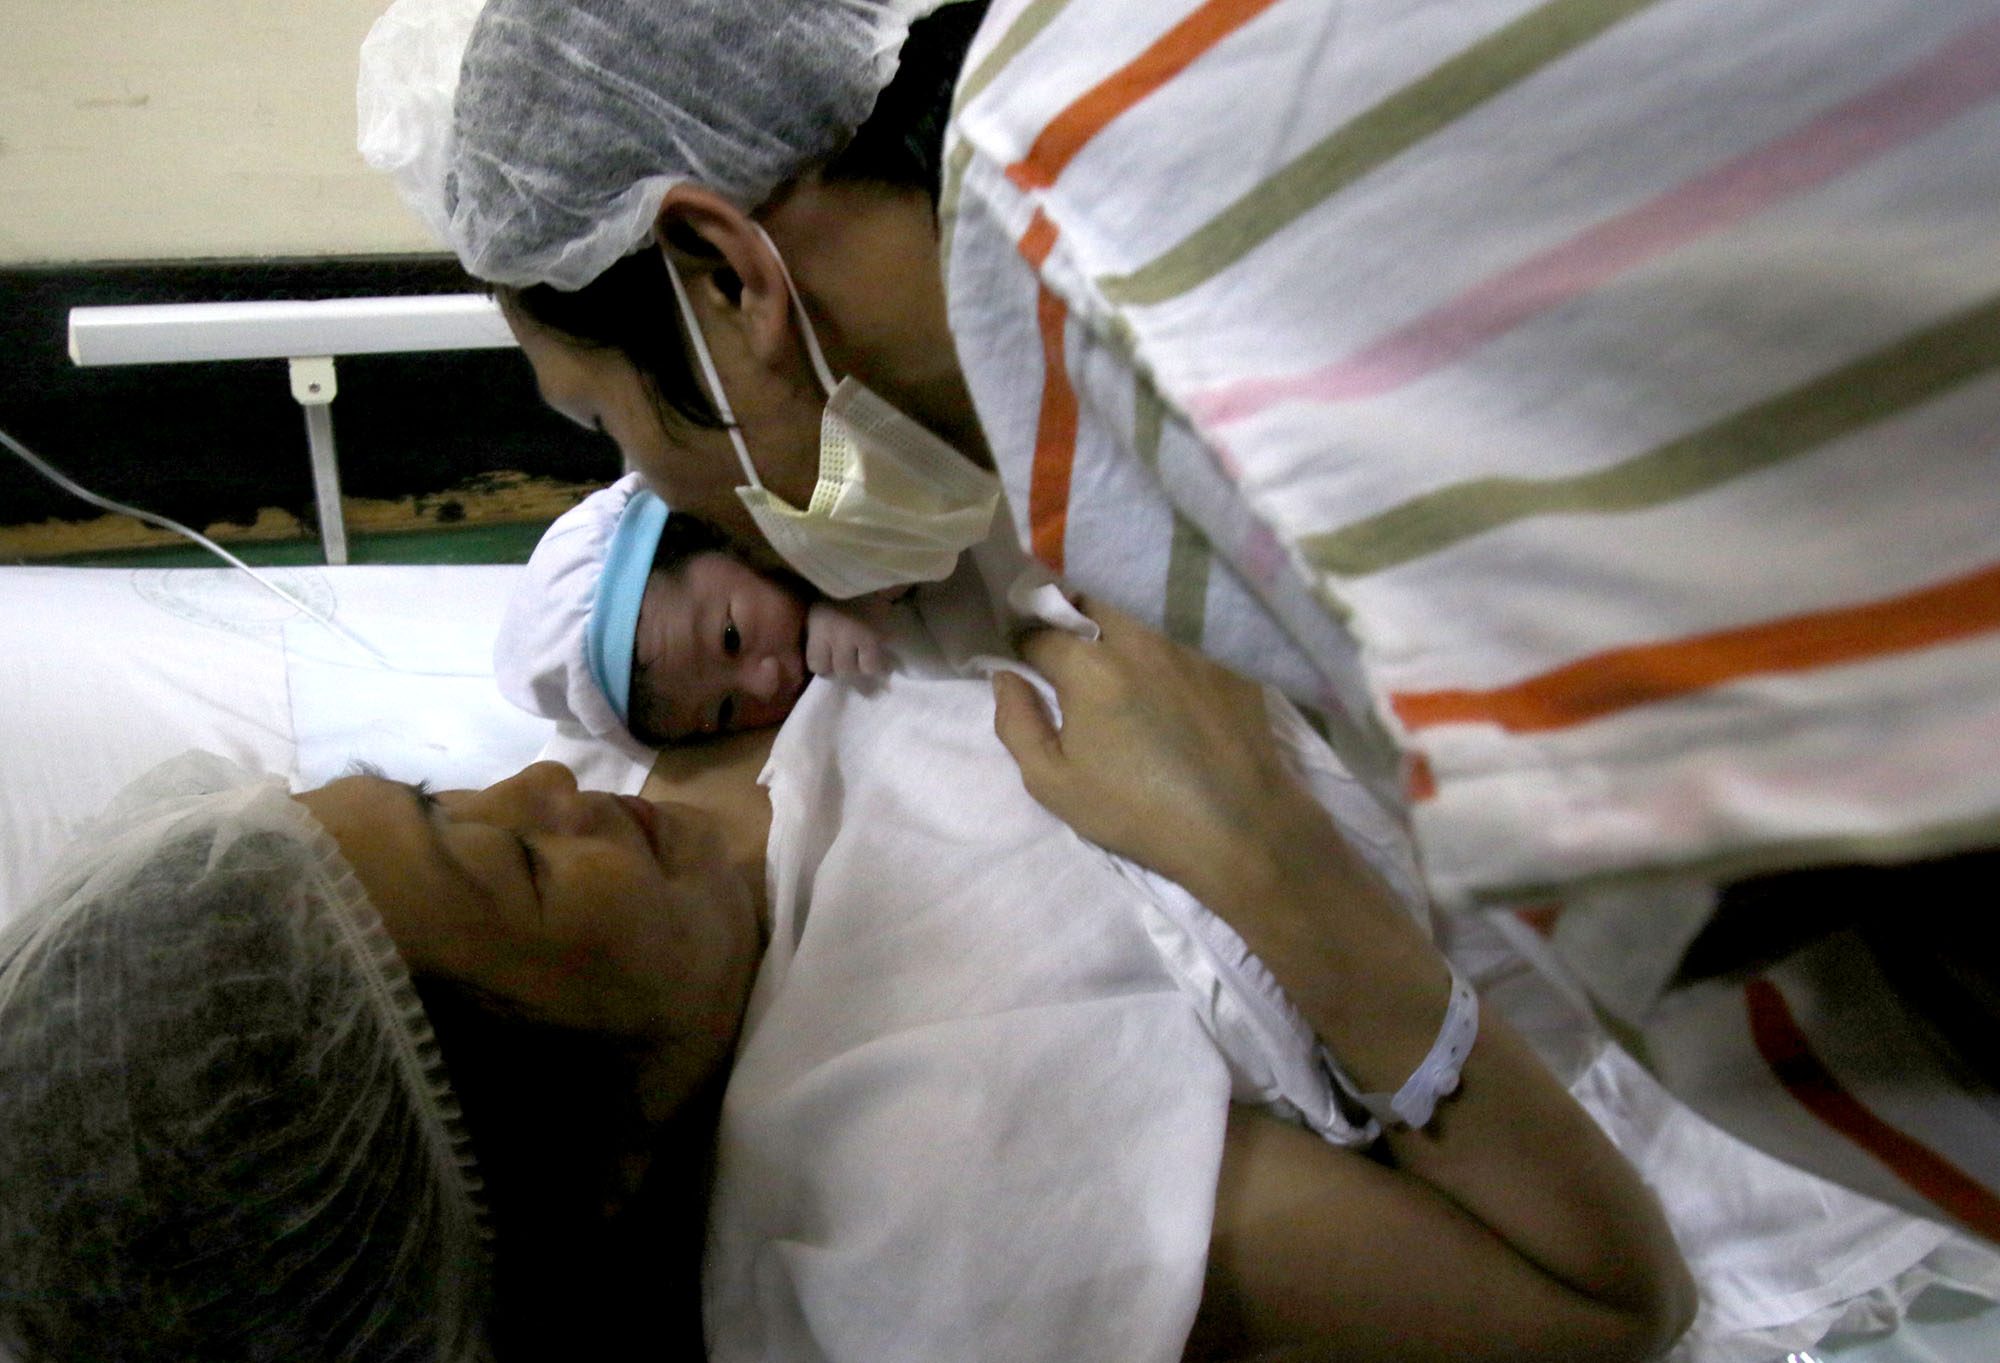 Senate OKs bill ensuring health of mothers, children in first 1,000 days